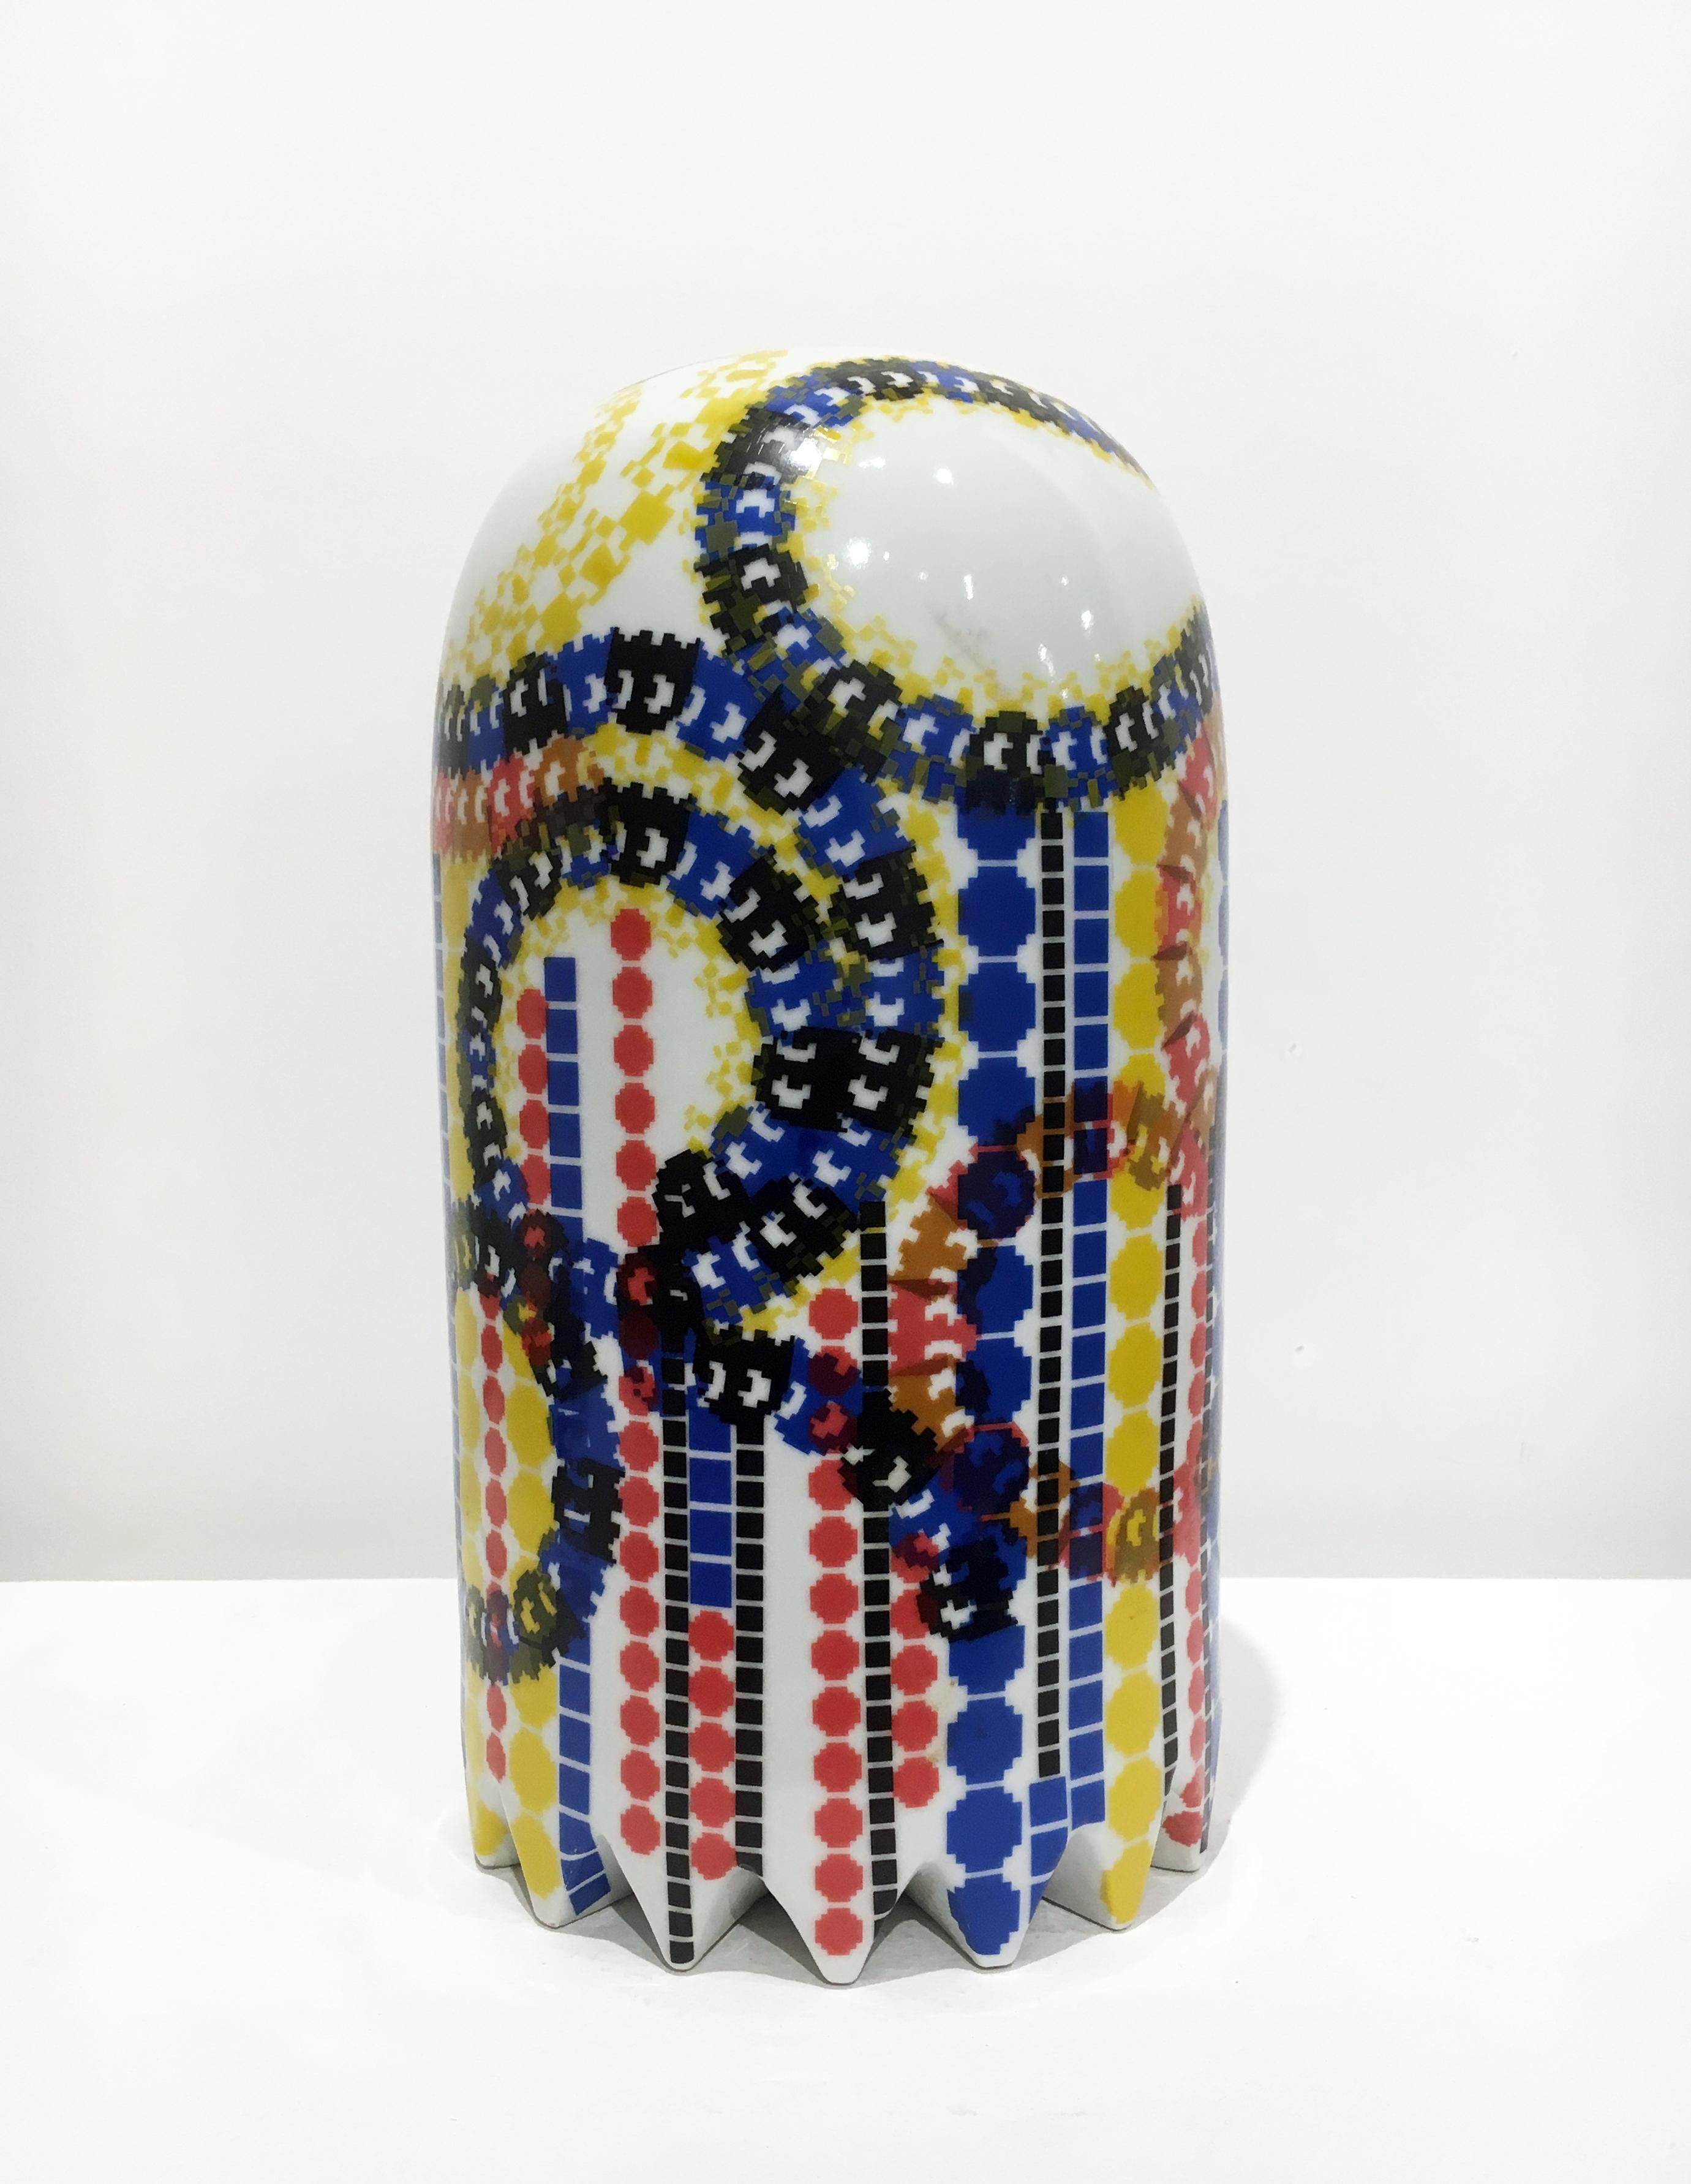 Zeitgenössische Keramik-Skulptur in Großformat mit bunten Deckeln, Porzellan 